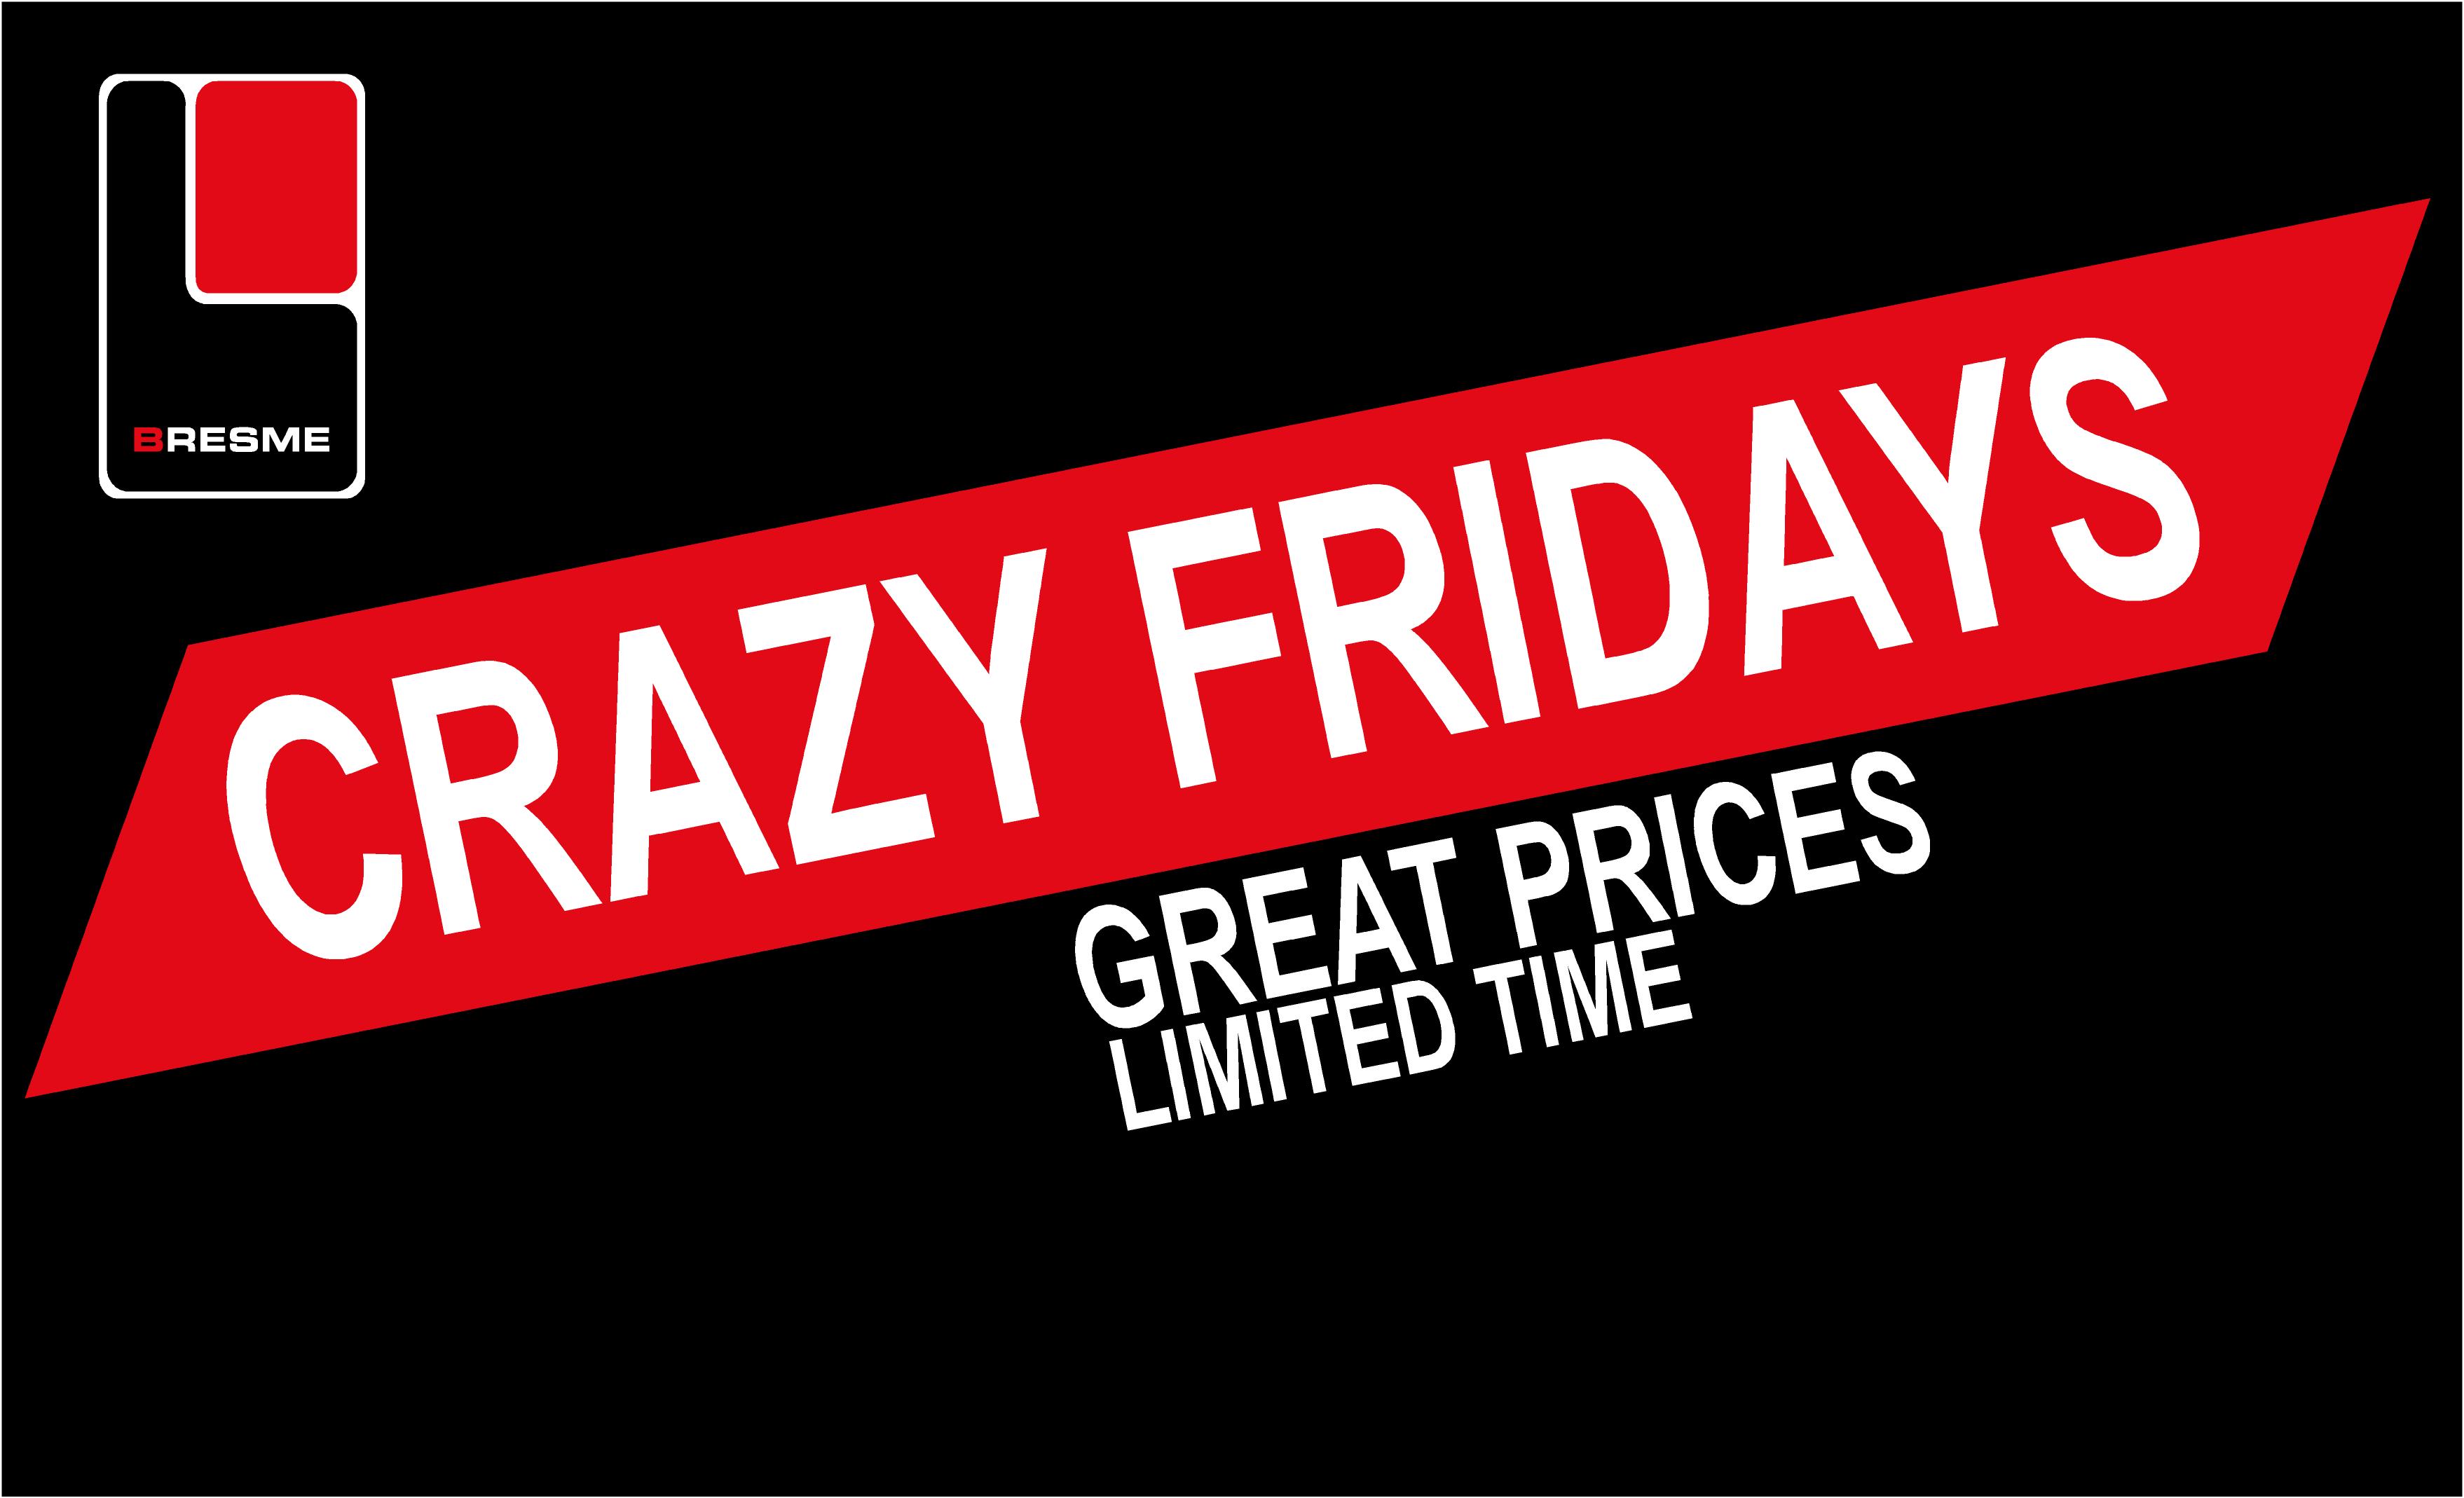 Crazy Fridays - general